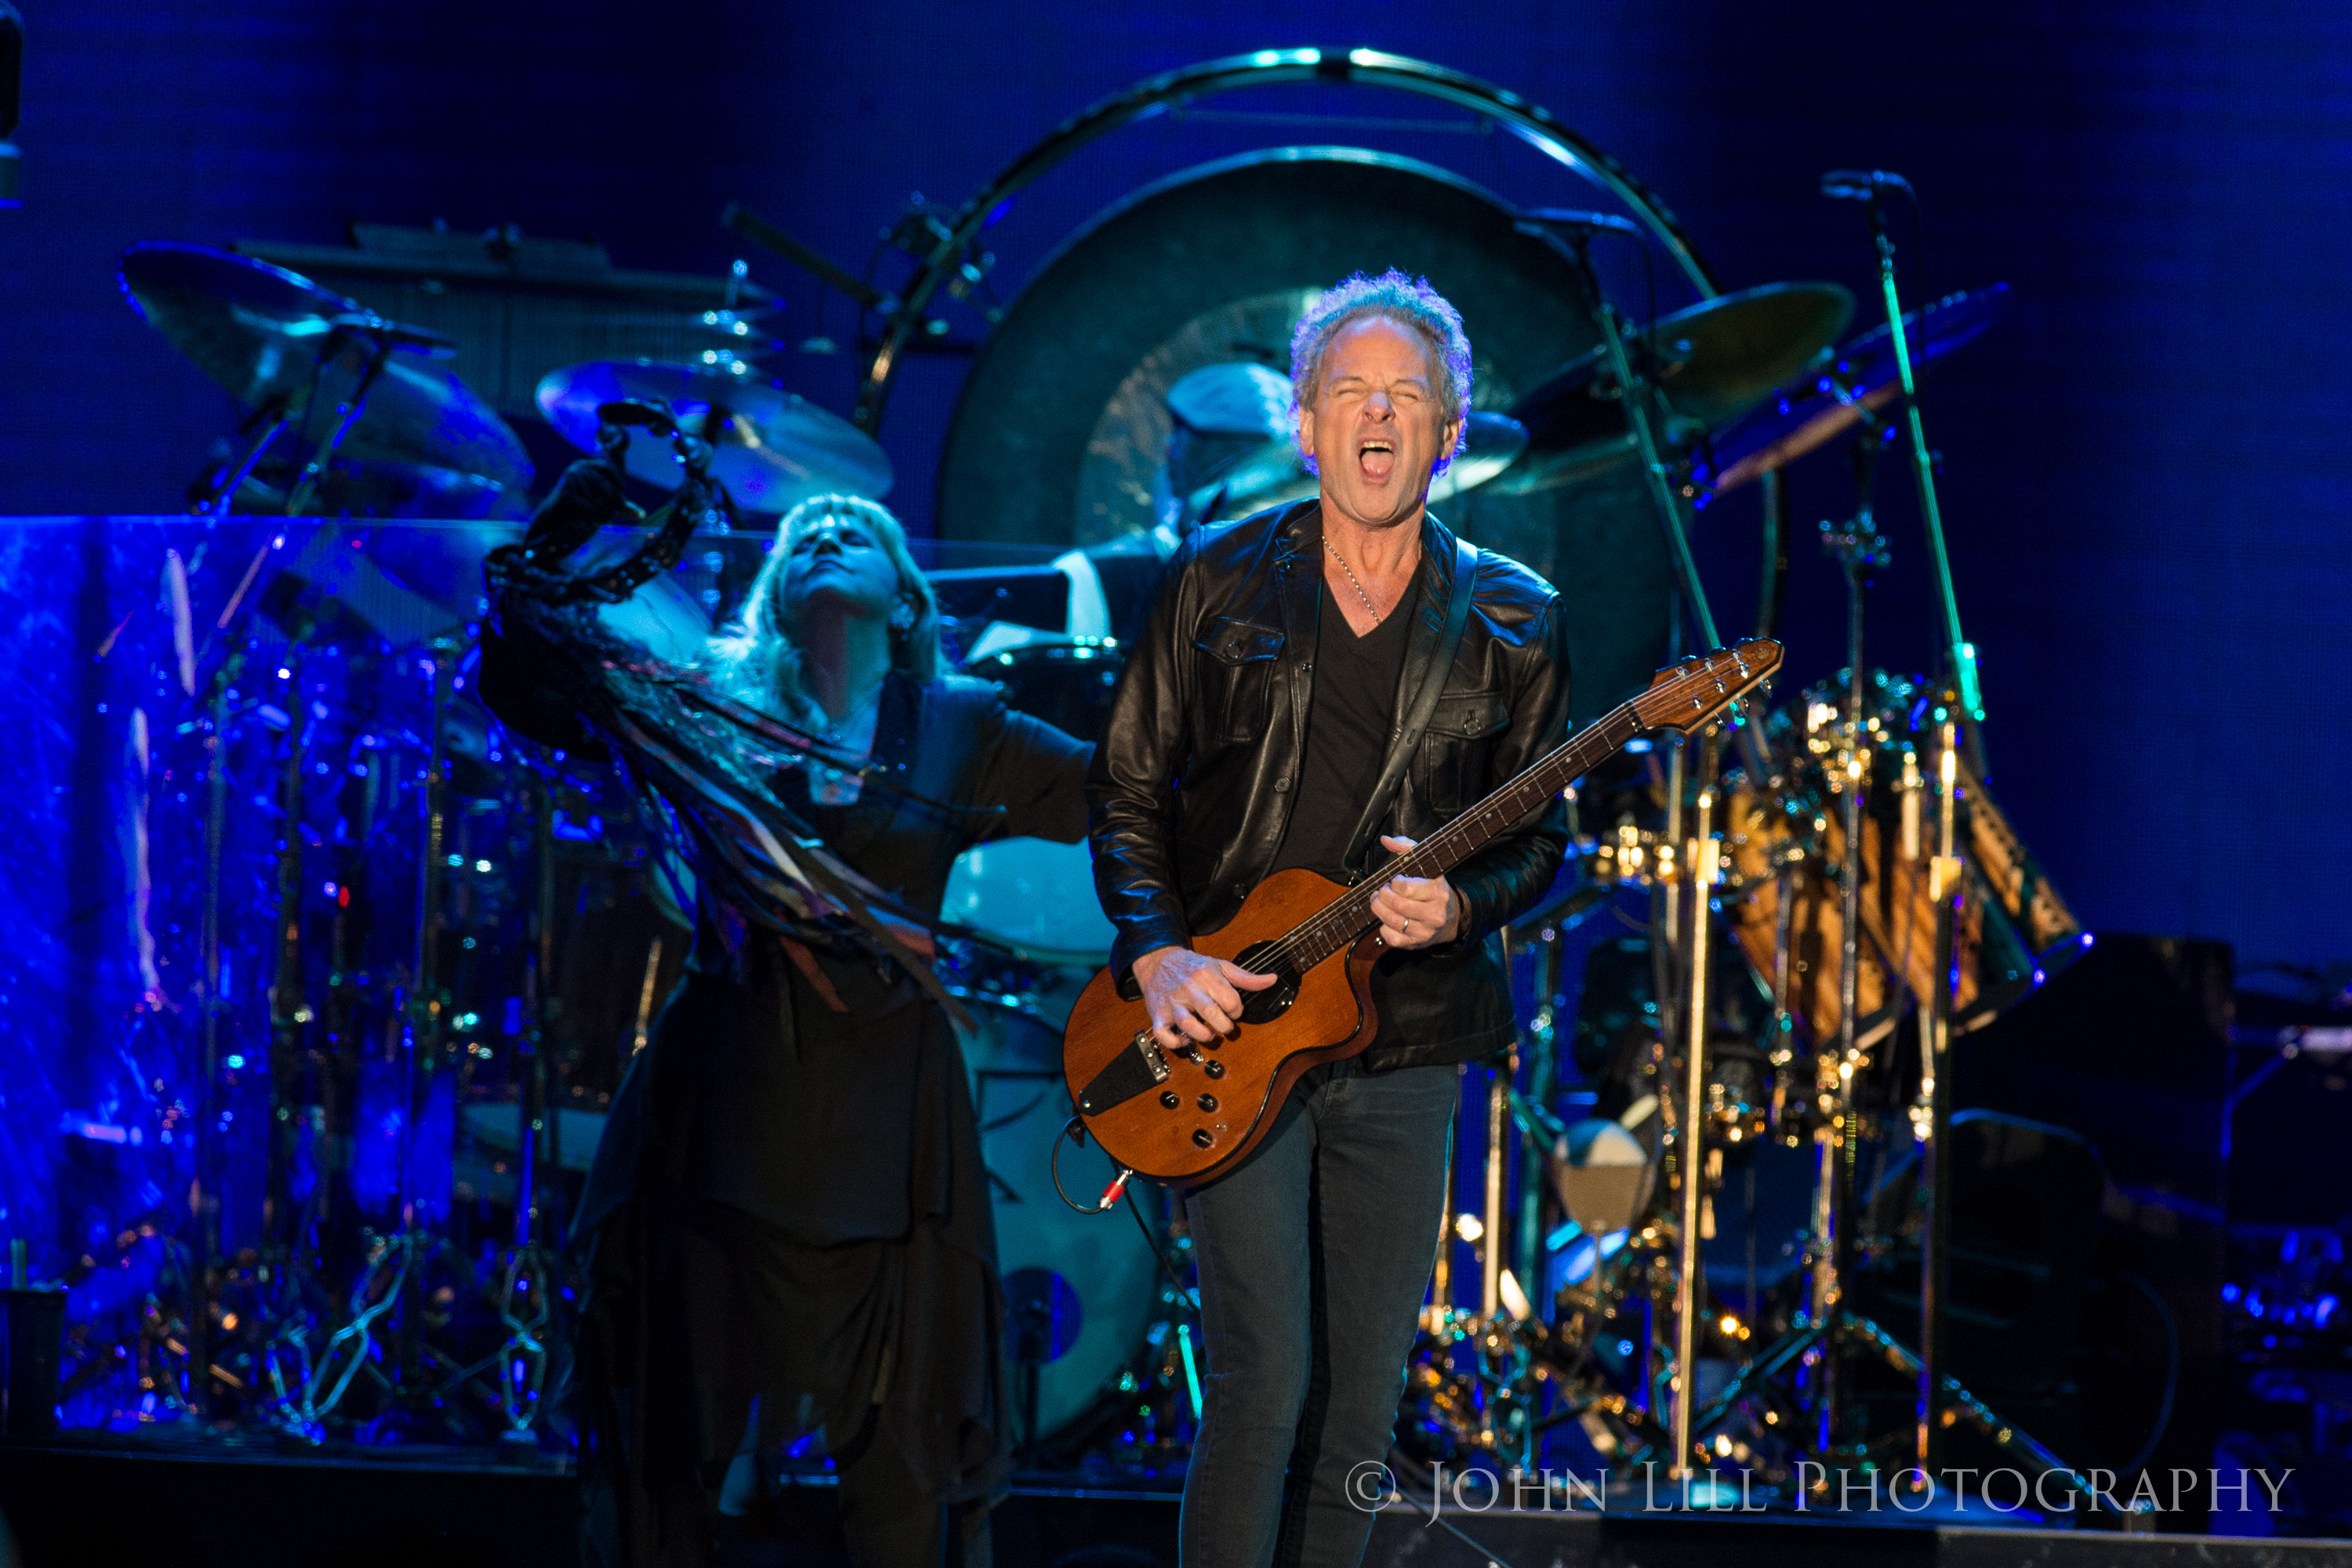 Fleetwood Mac perform at the Tacoma Dome. Photo by John Lill